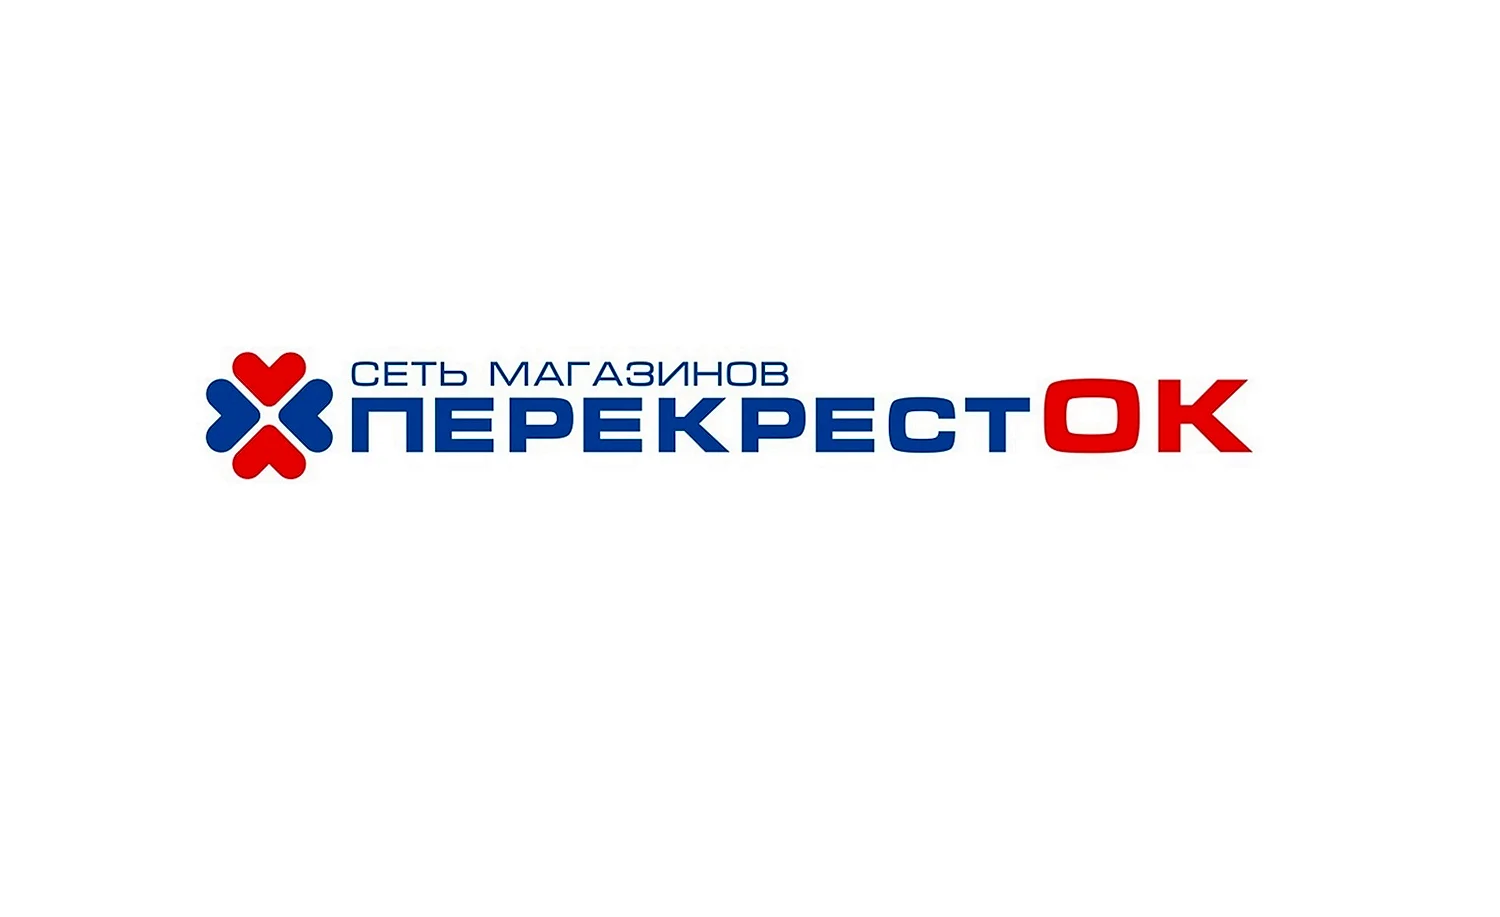 Перекресток Могилев логотип